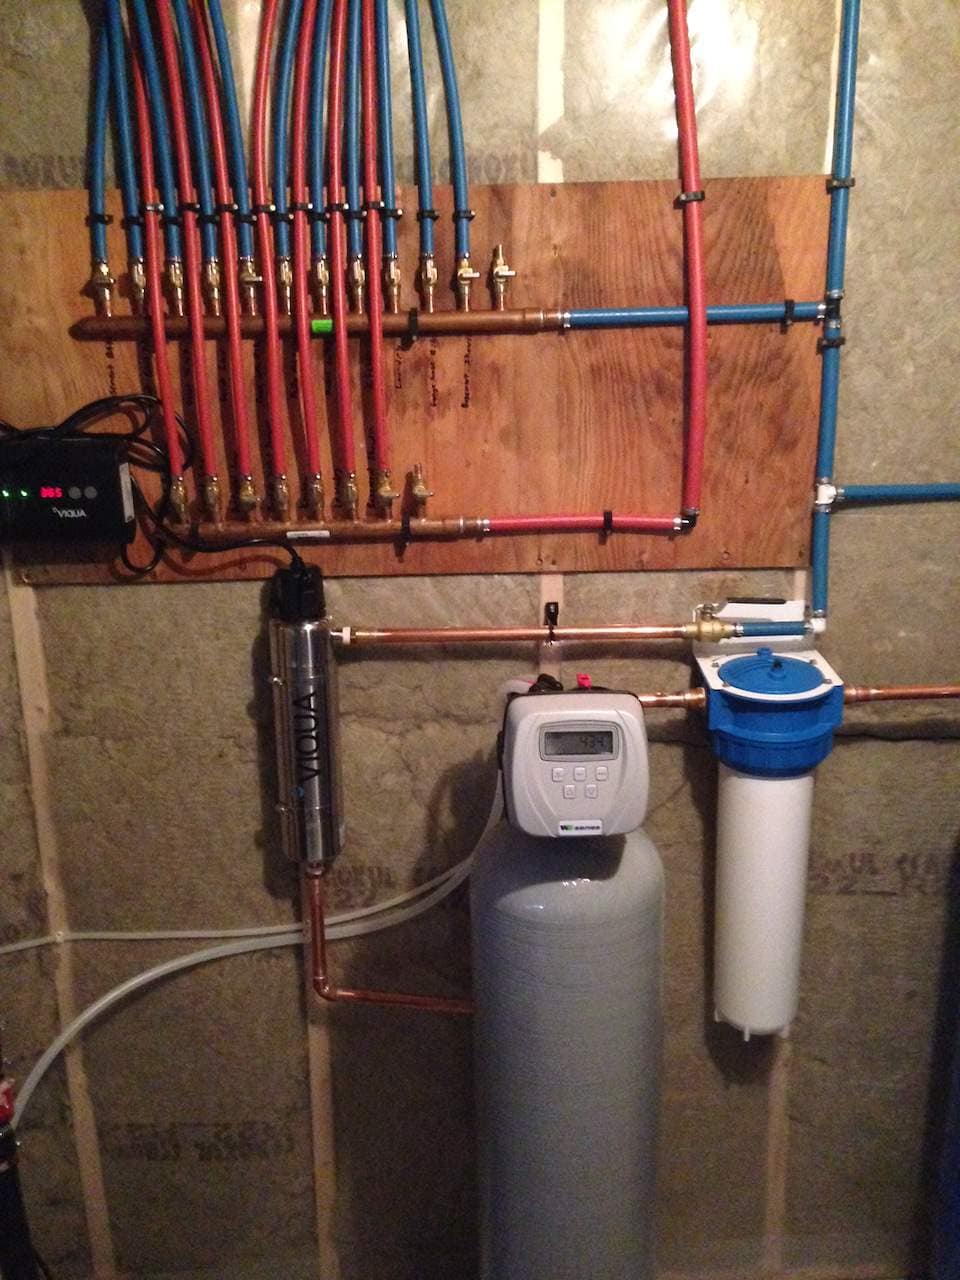 Organized plumbing in the basement